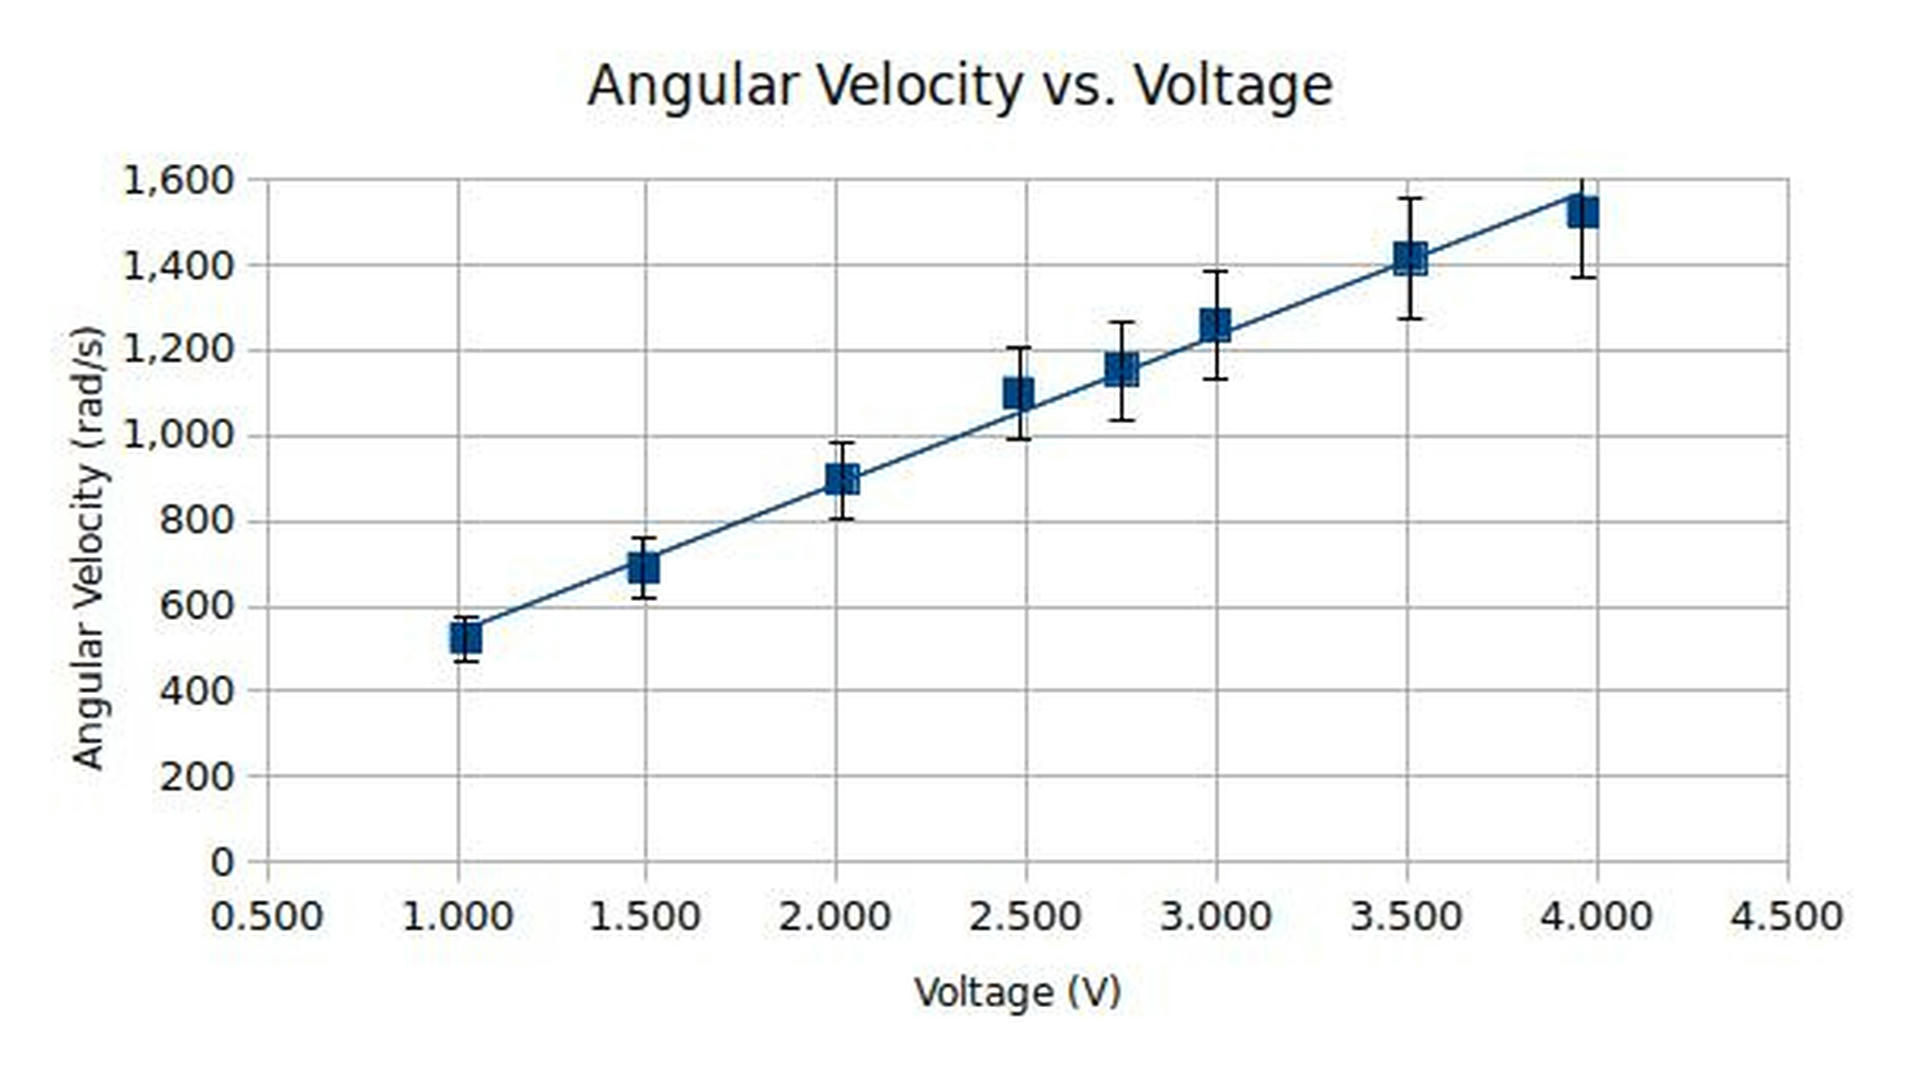 Voltage vs. Angular Velocity